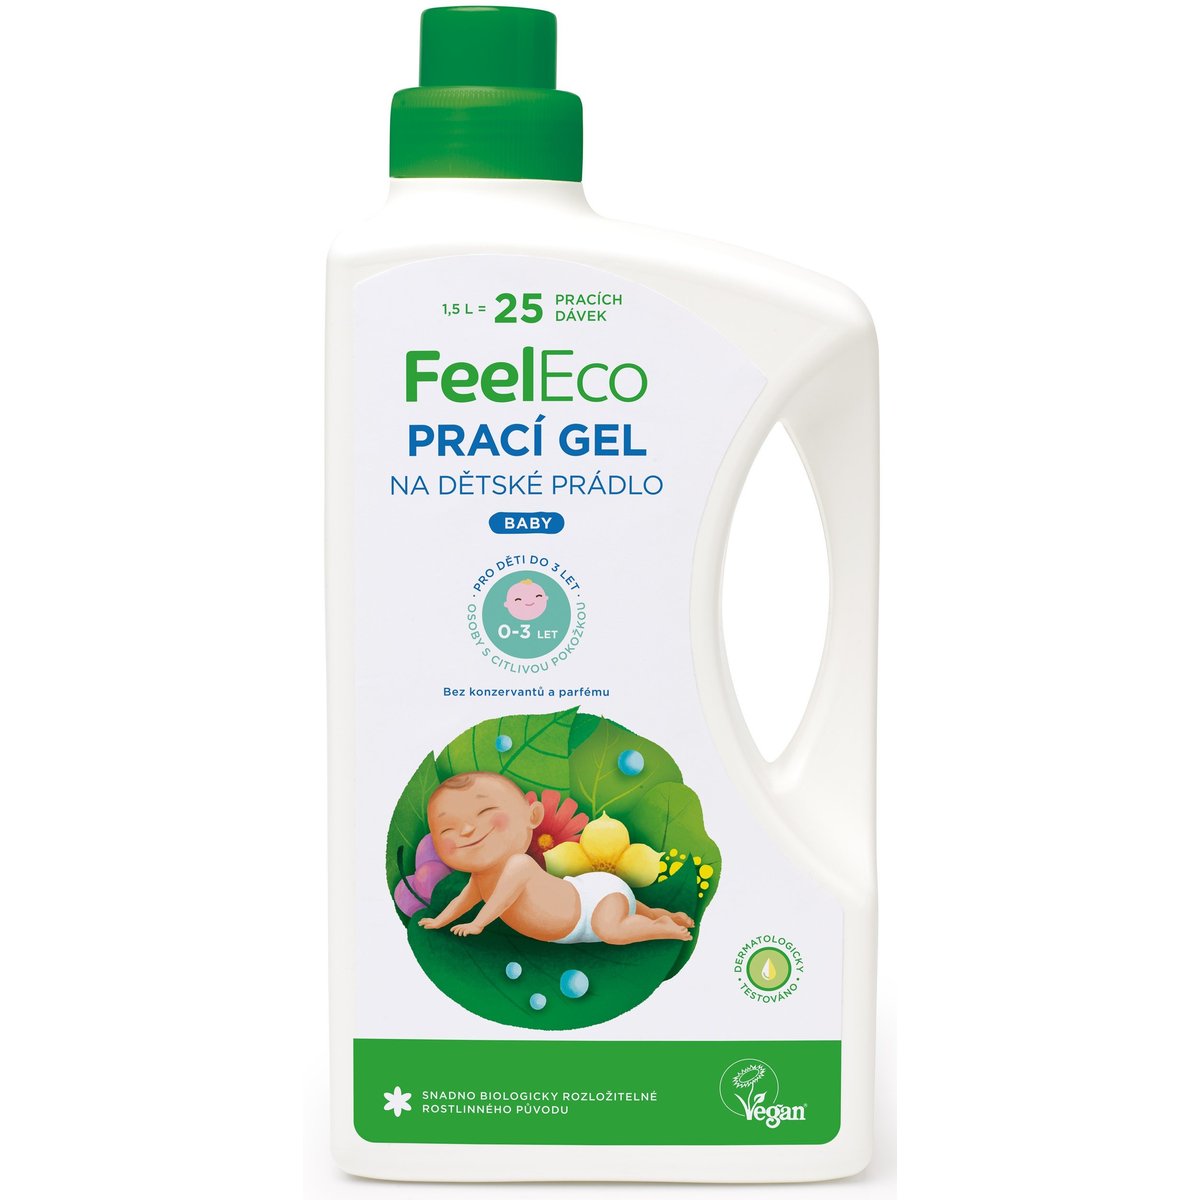 Feel Eco Prací gel baby (1,5 l)